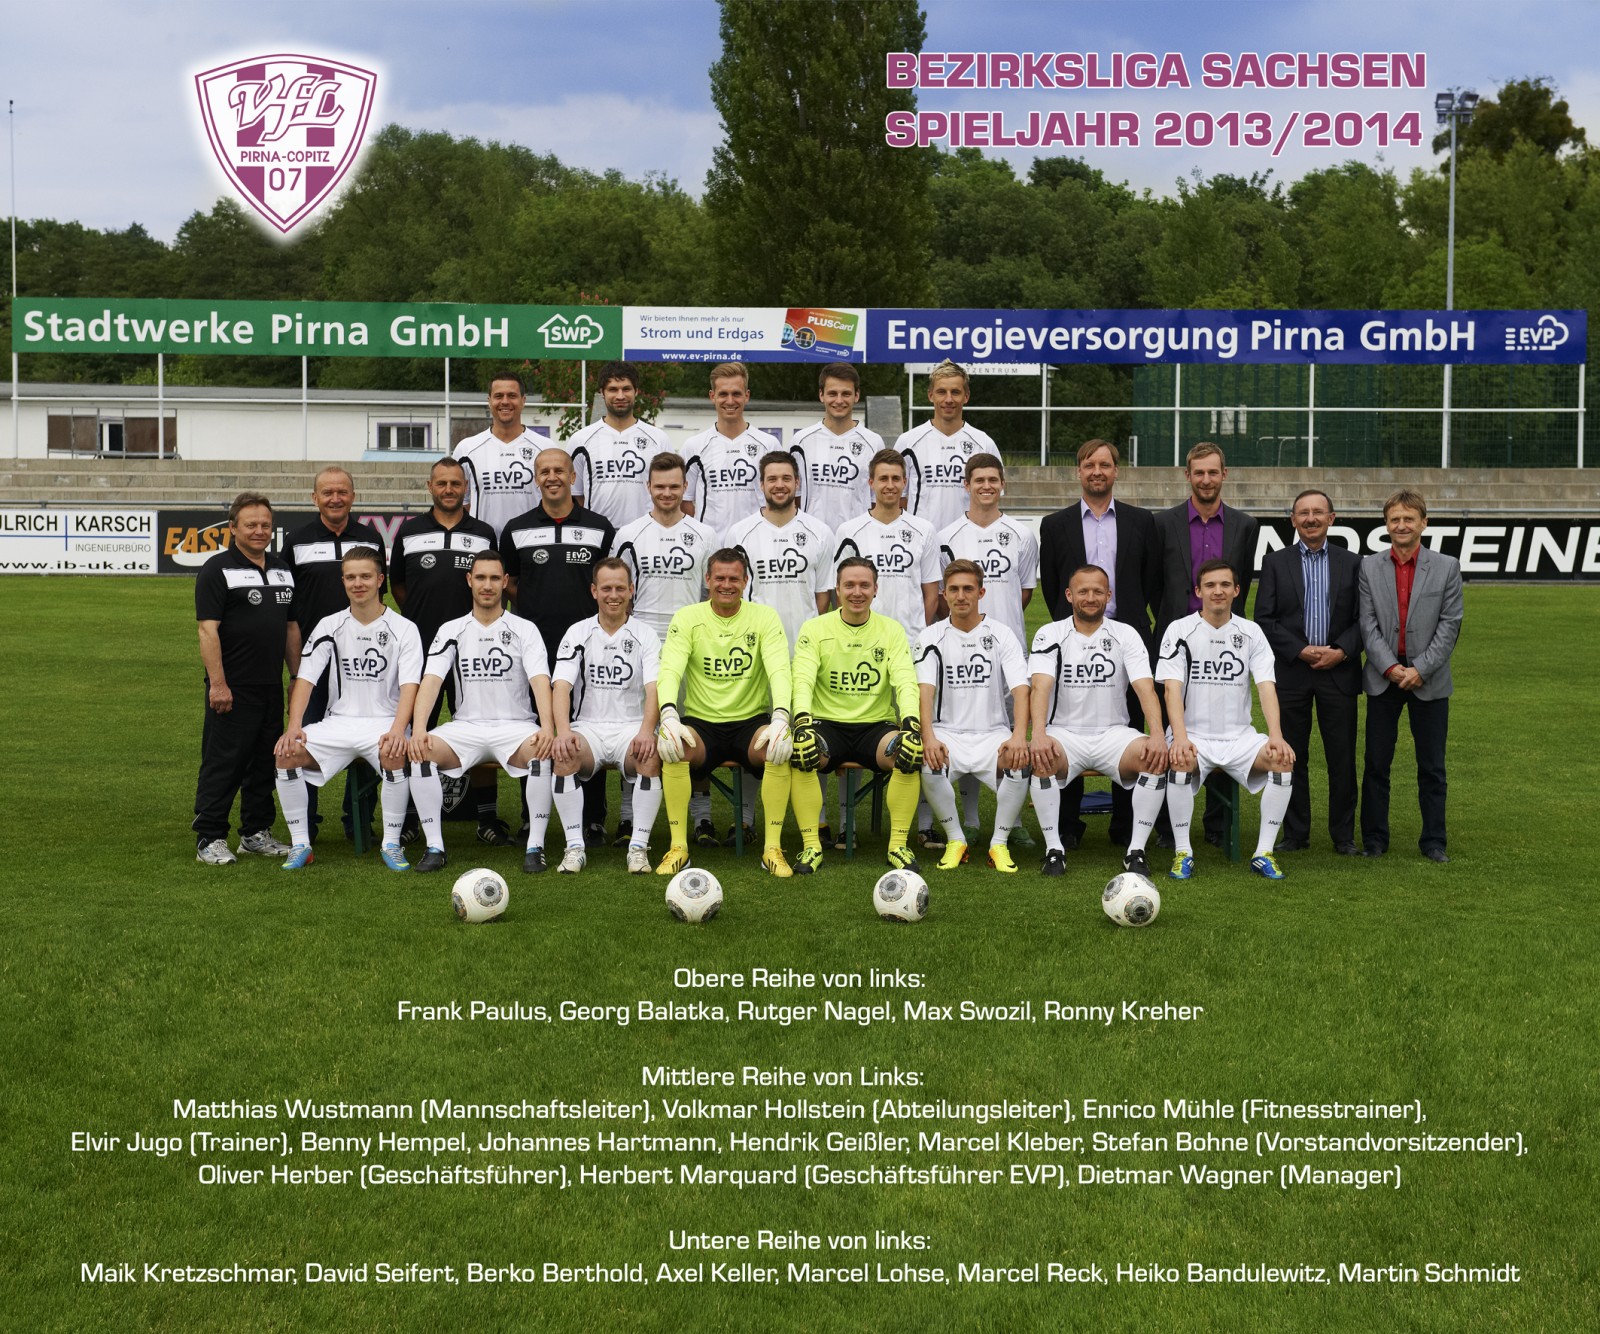 Bezirksliga 2013/2014: Das Team des VfL Pirna-Copitz. Foto: VfL